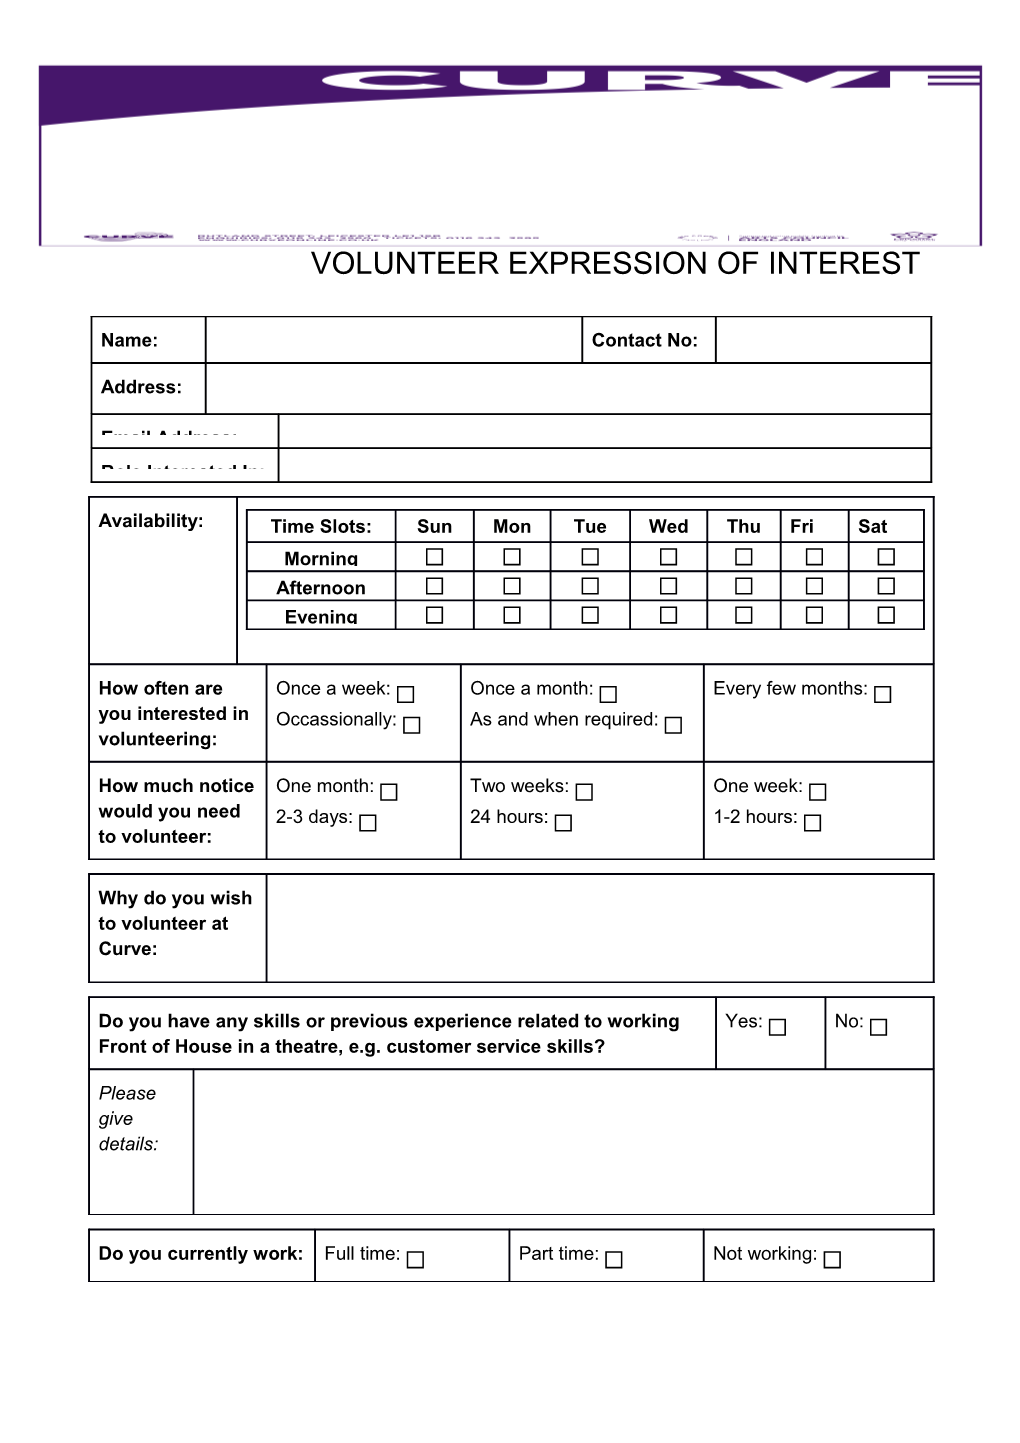 Volunteer Expression of Interest